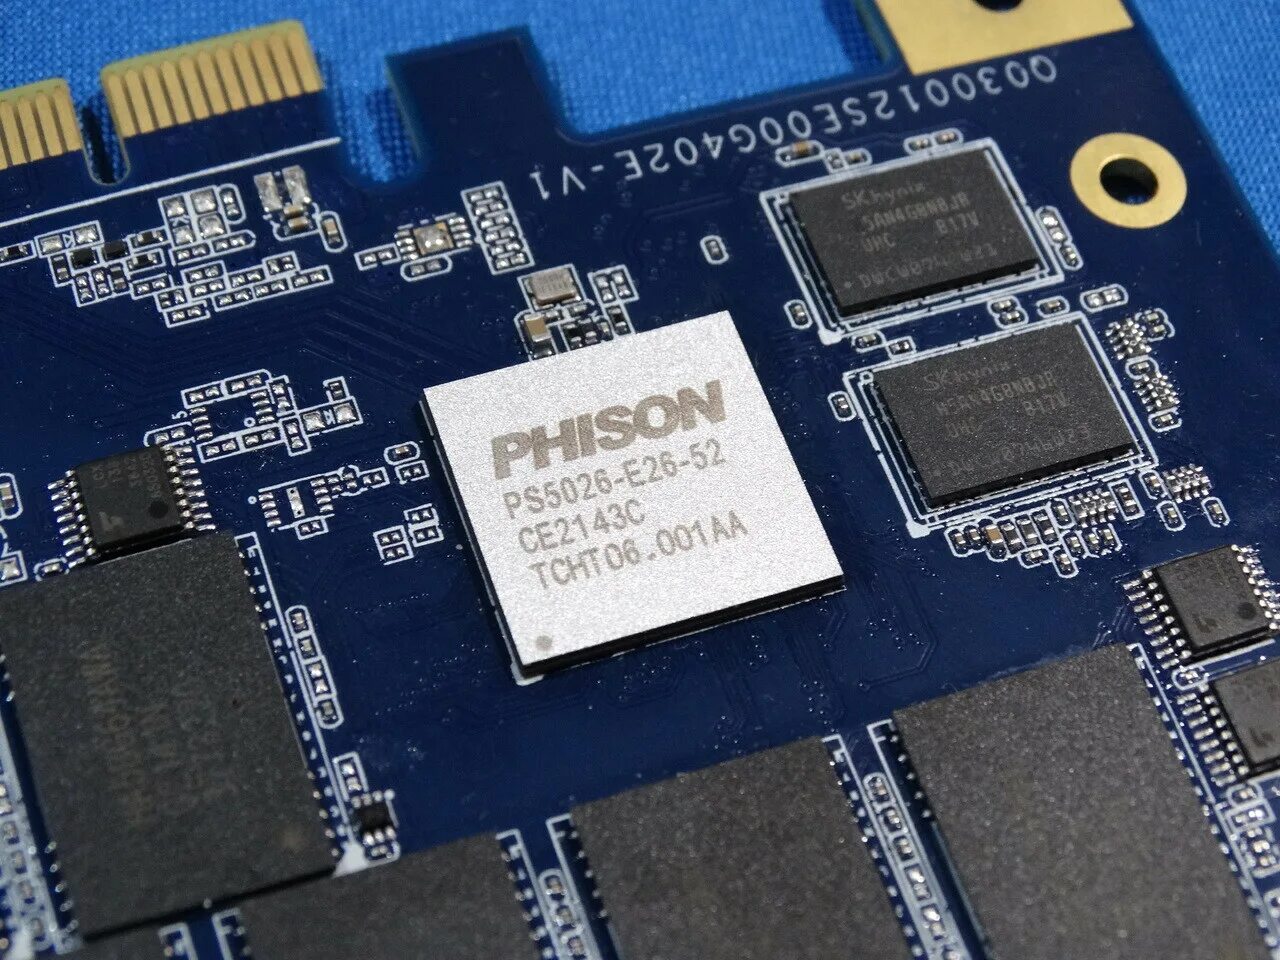 Ssd pcie 5.0. Phison SSD m2 256. SSD m2,5 Phison. PCI 5 SSD. Контроллер Phison.